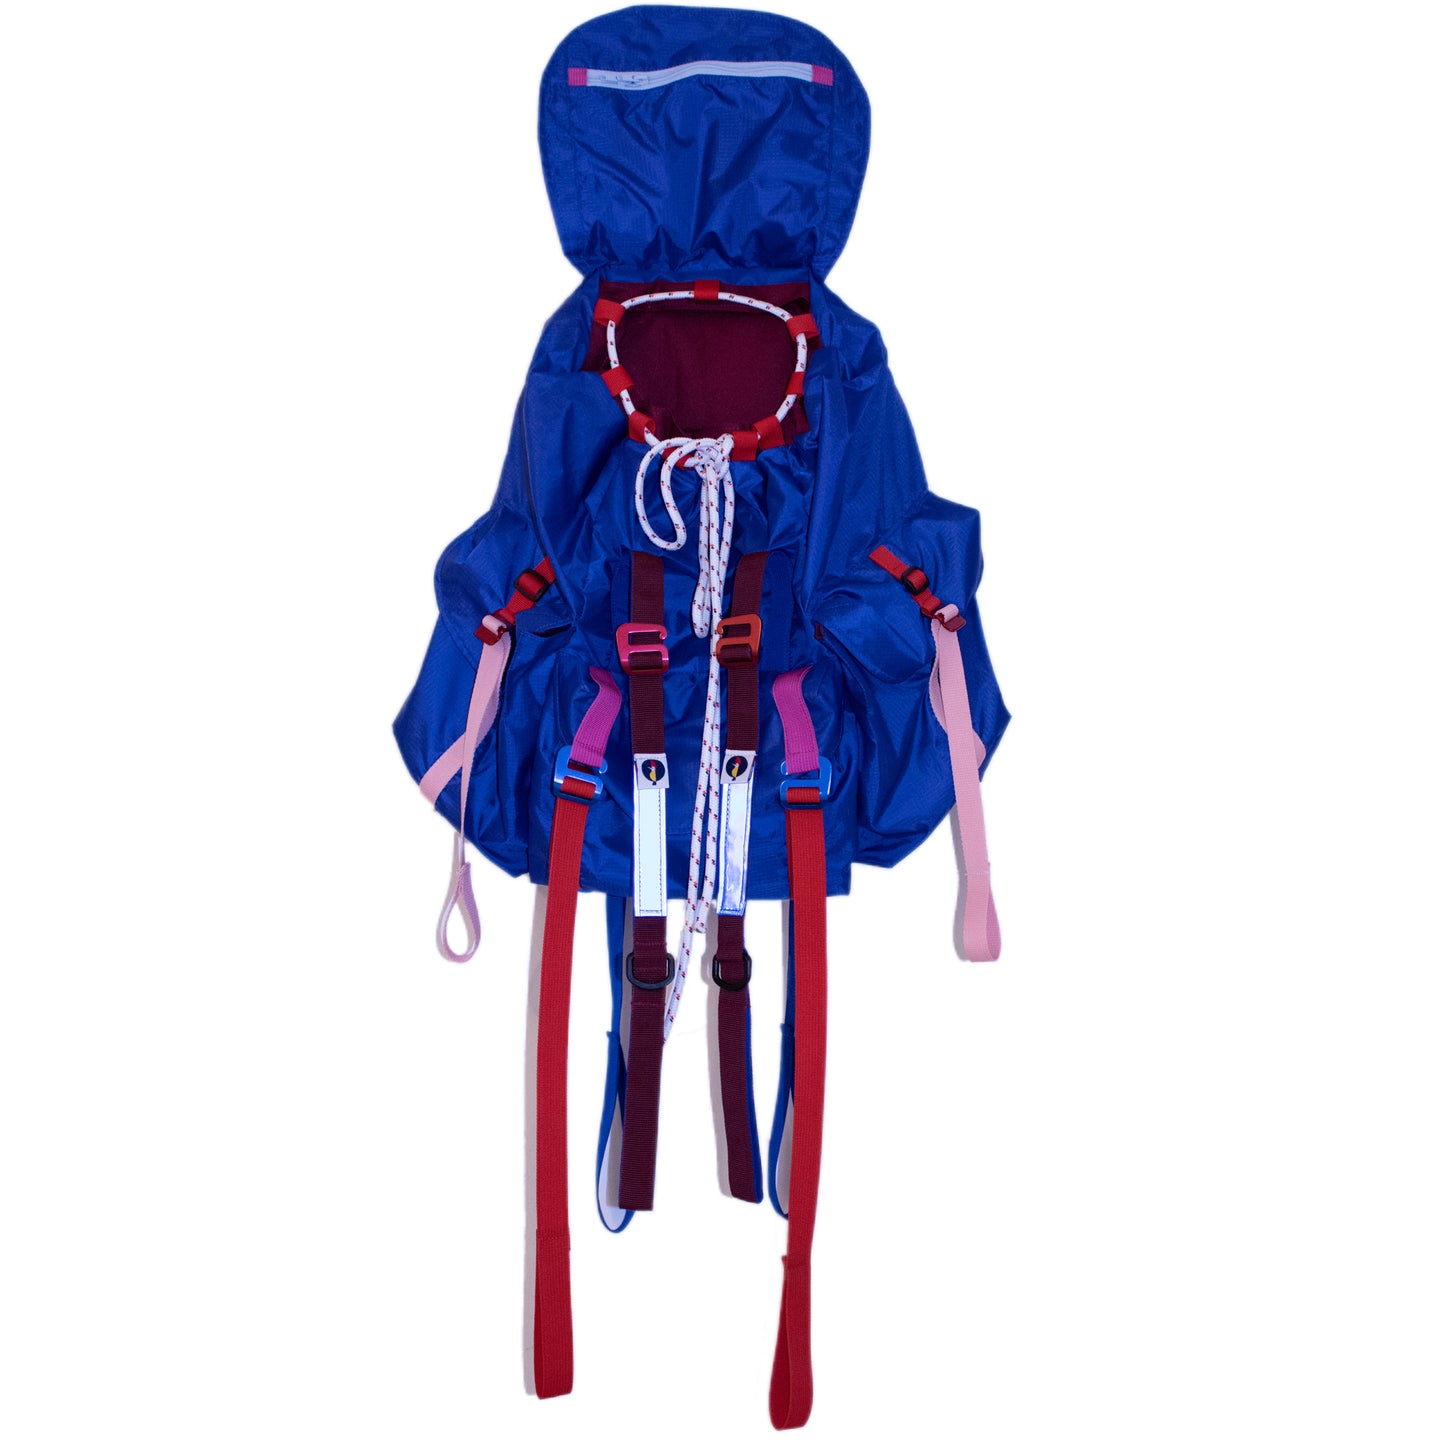 Nexus Oversized Backpack In Light Weight Royal Blue Ripstop - Uriel Studio